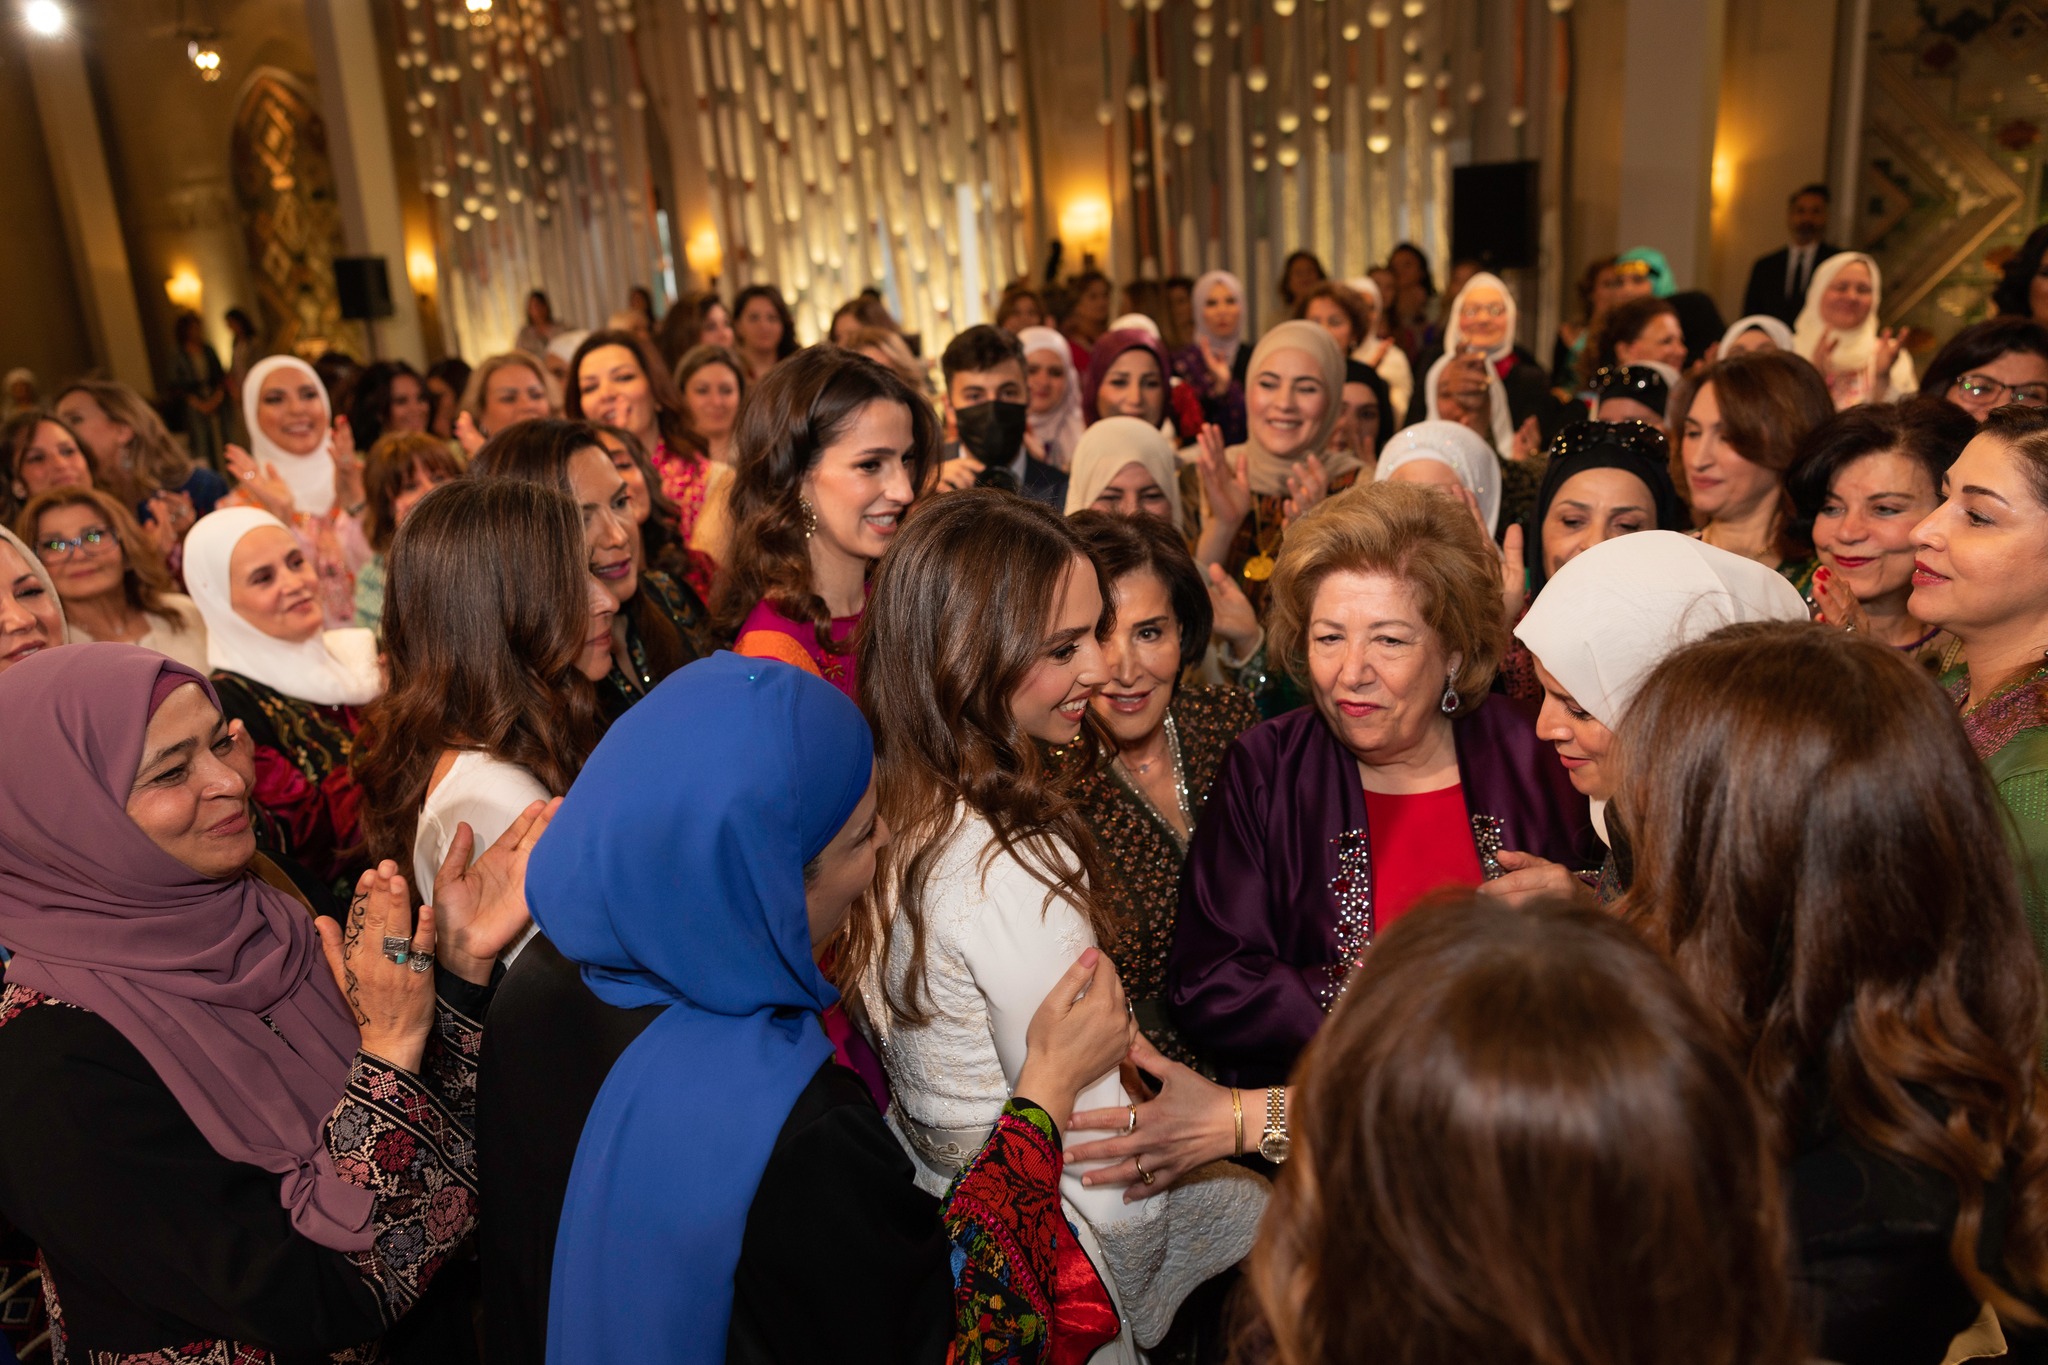 Queen Rania, Princess Iman and Rajwa Al-Saif Khaled arriving for Iman's Henna Party